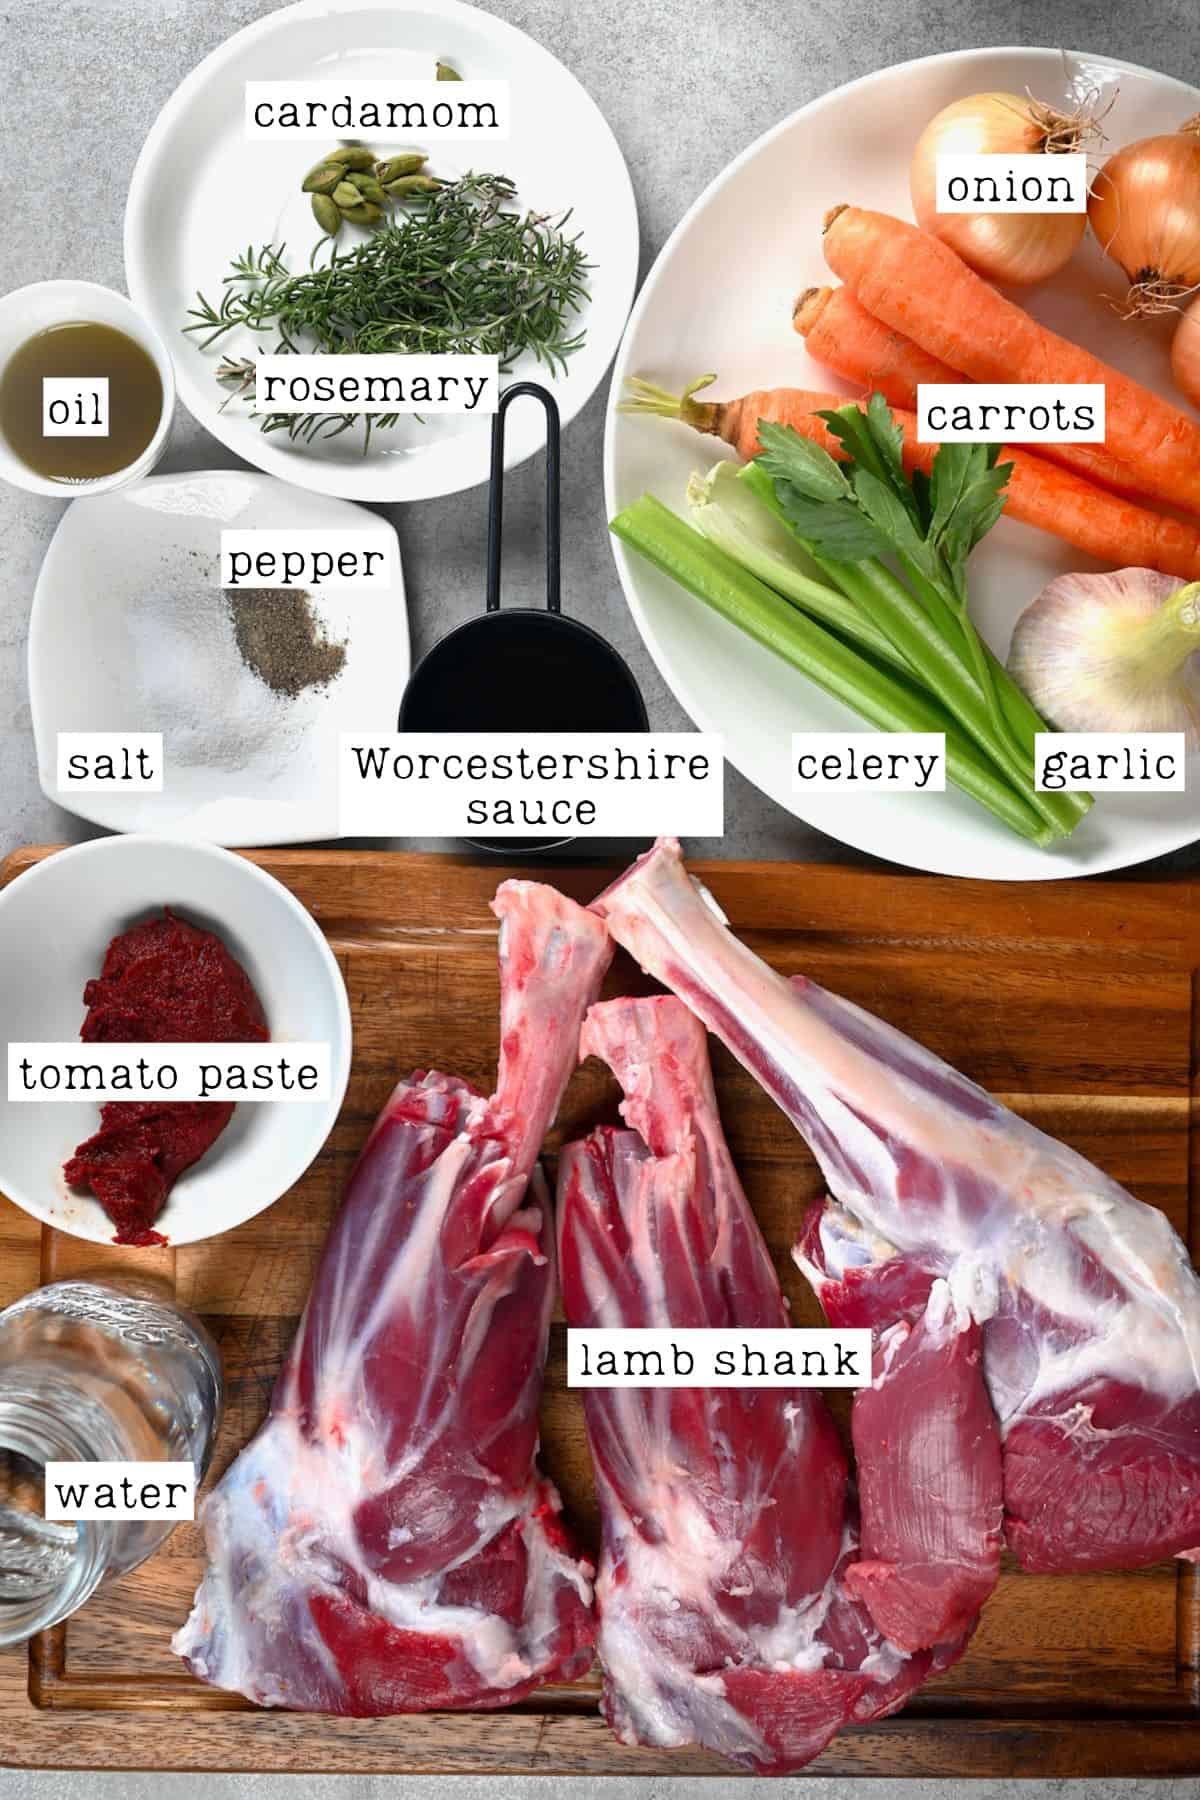 Ingredients for braised lamb shank